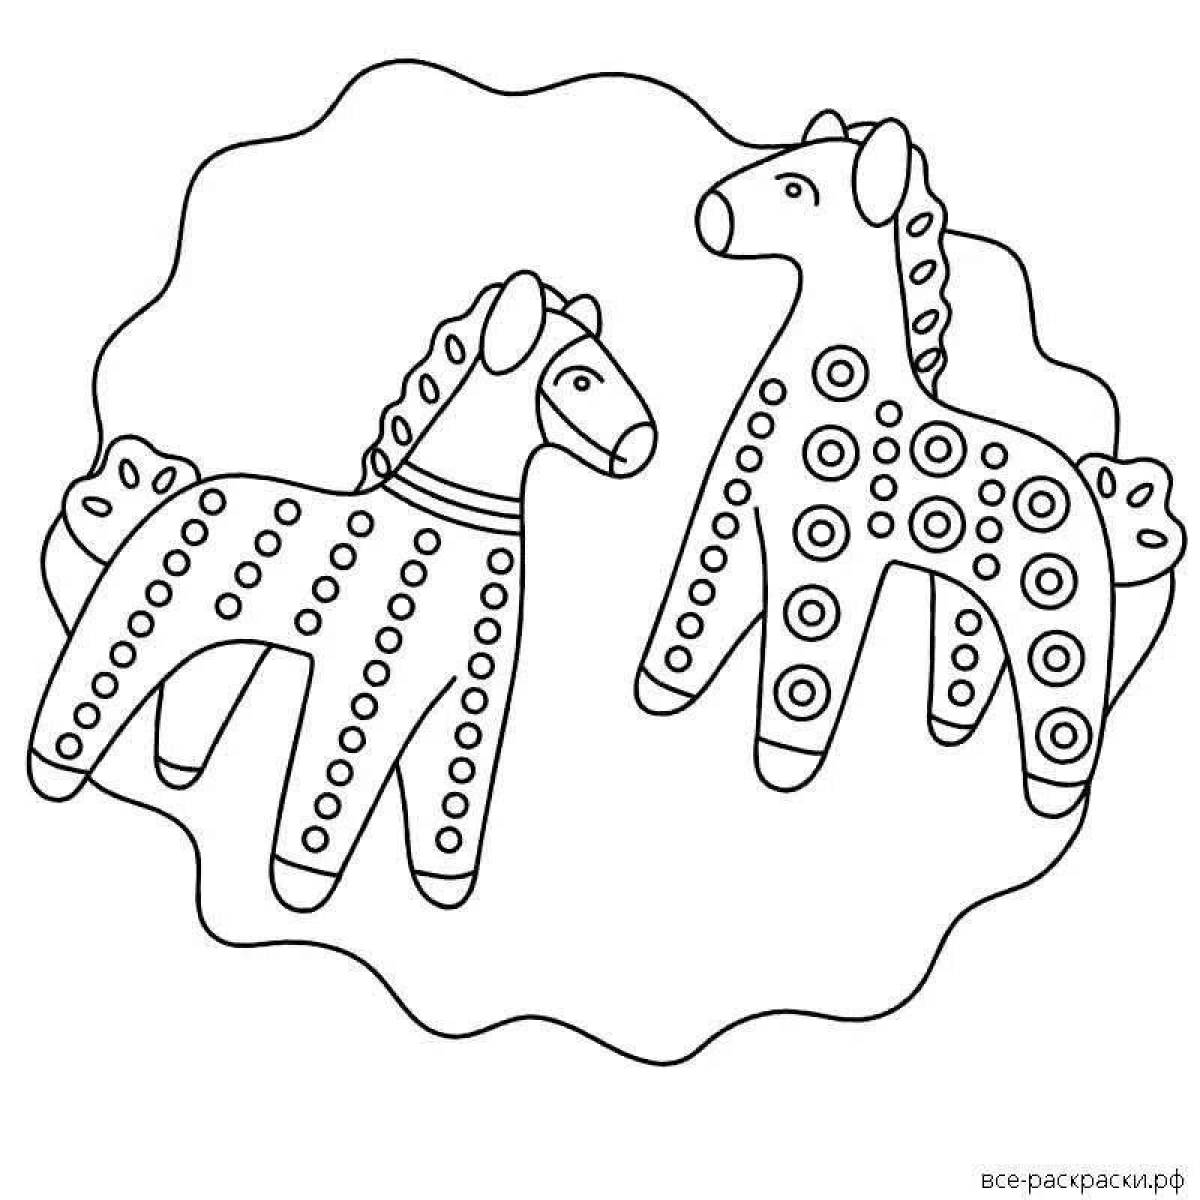 Intricate Dymkovo toy horse